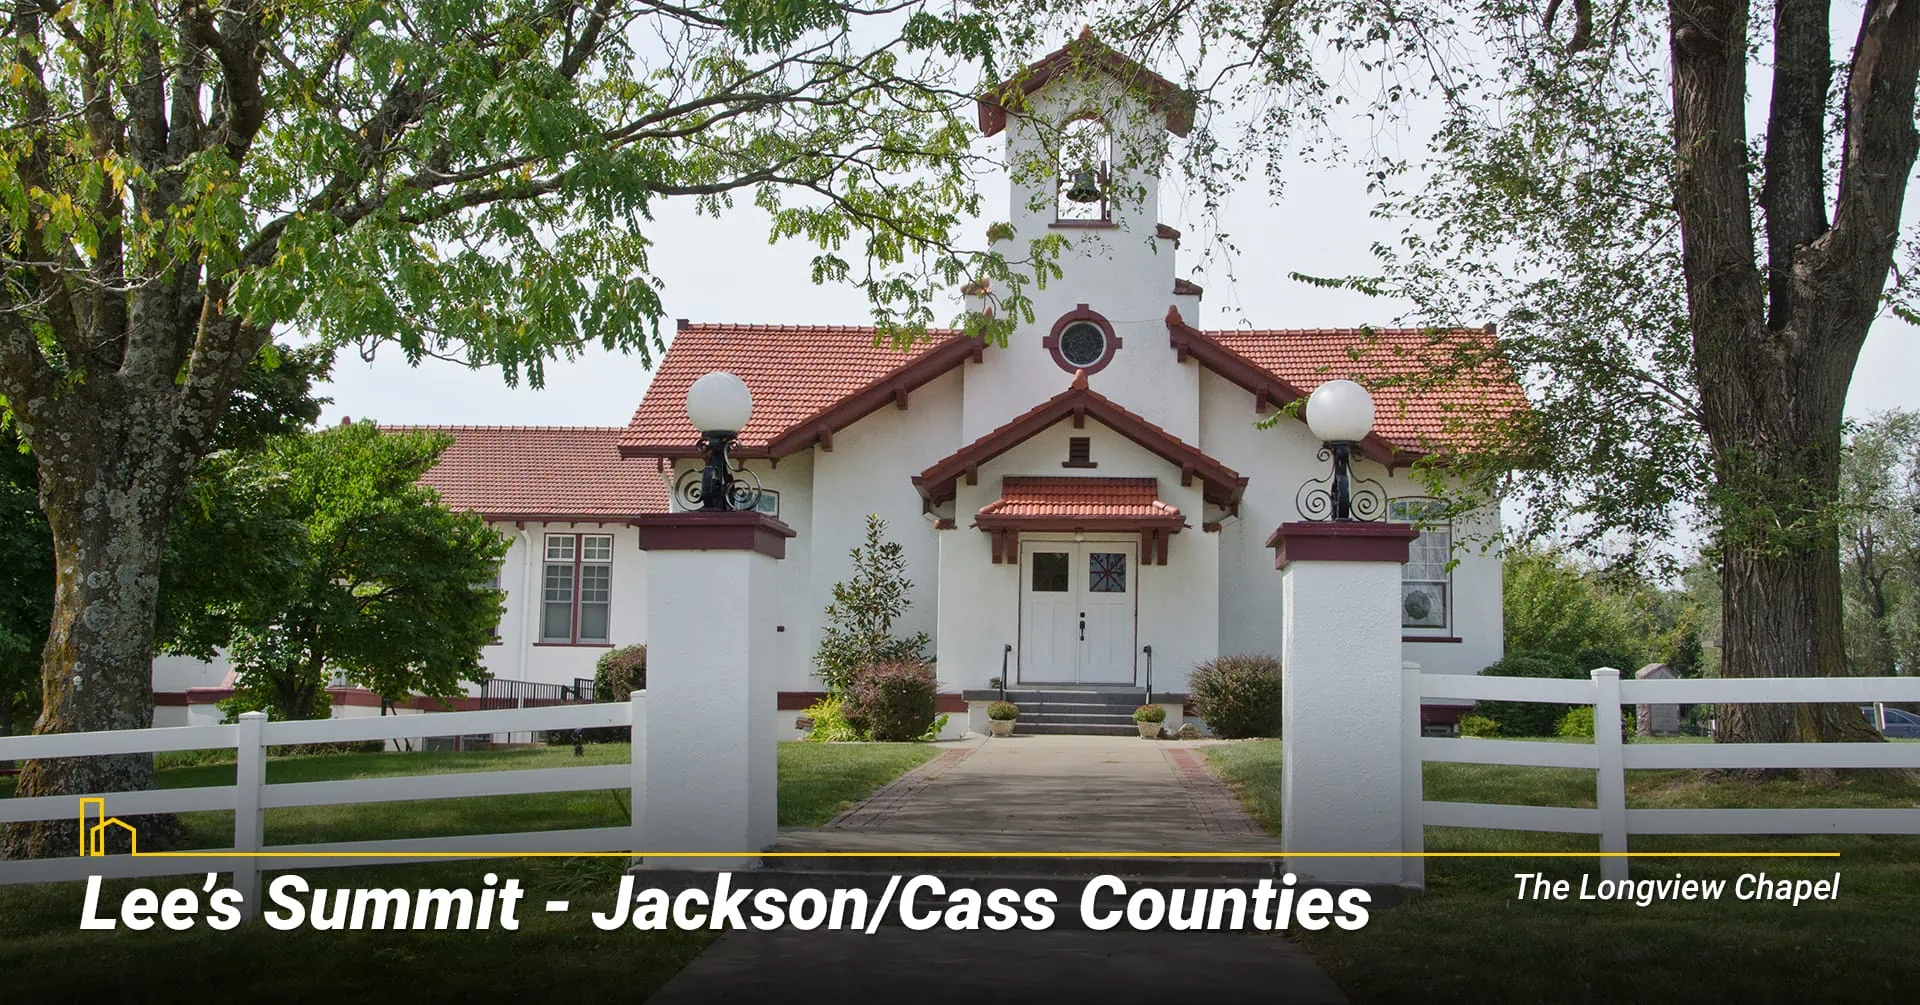 Lee’s Summit - Jackson/Cass Counties